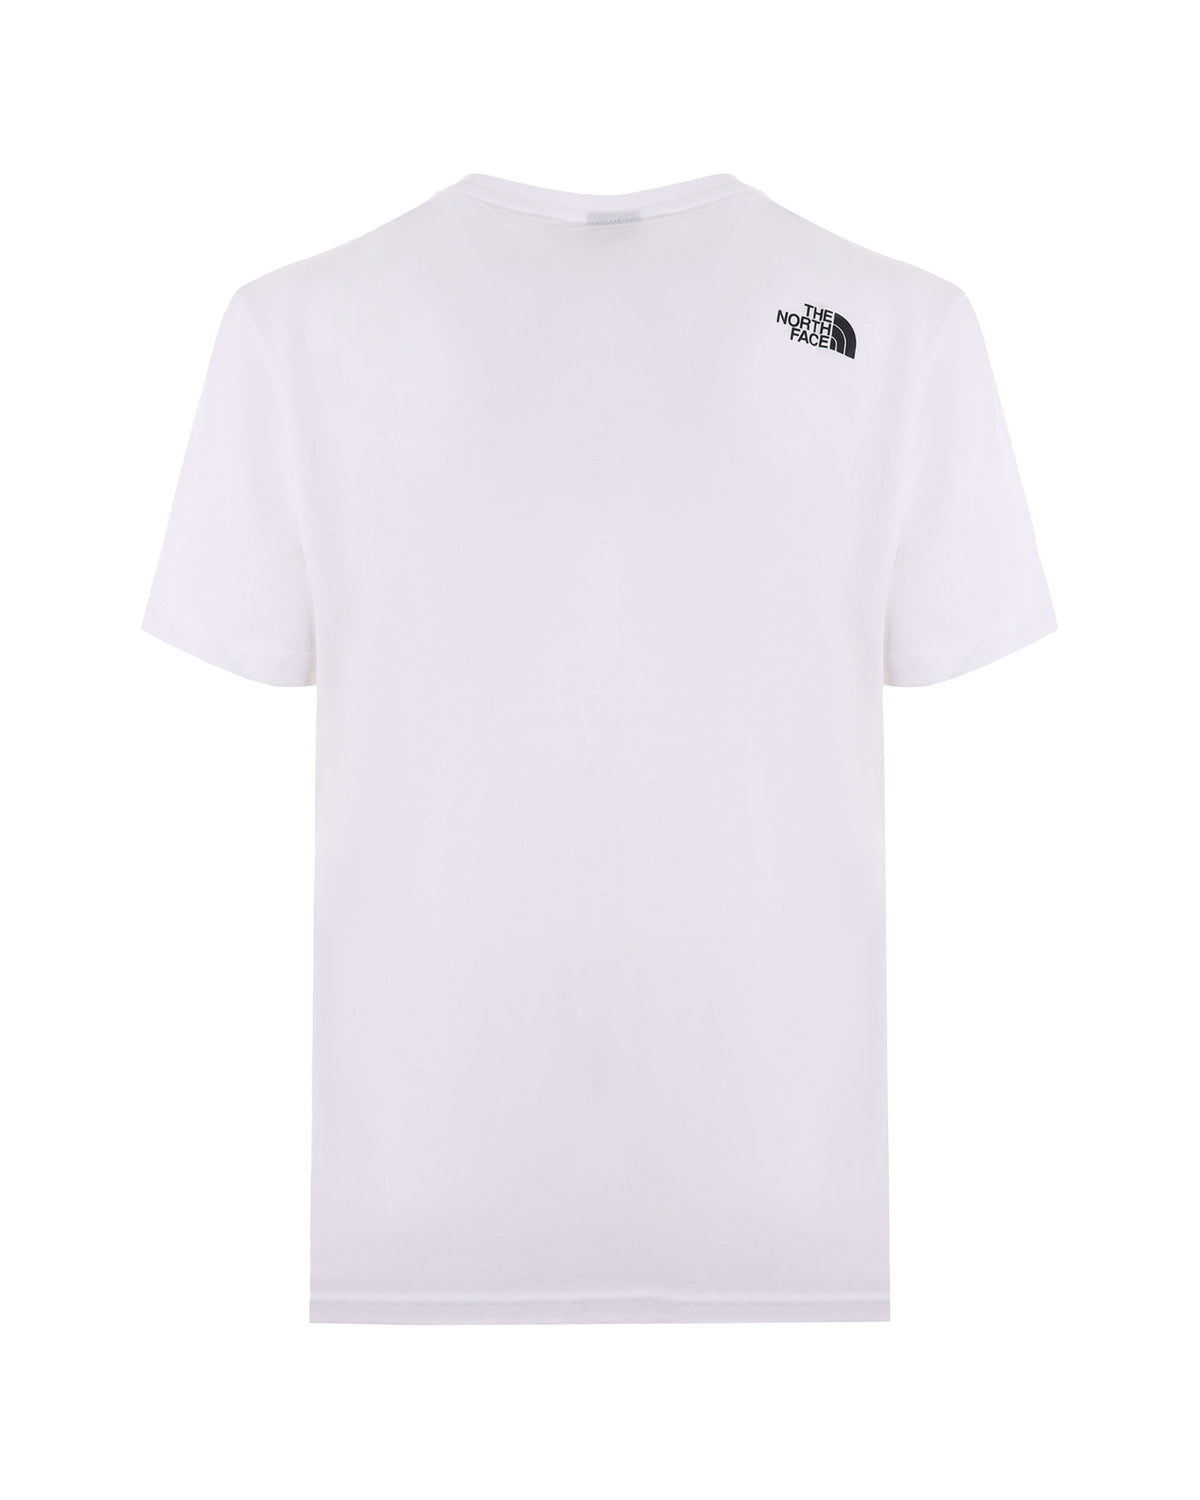 T-Shirt Uomo The North Face Box Logo Bianco